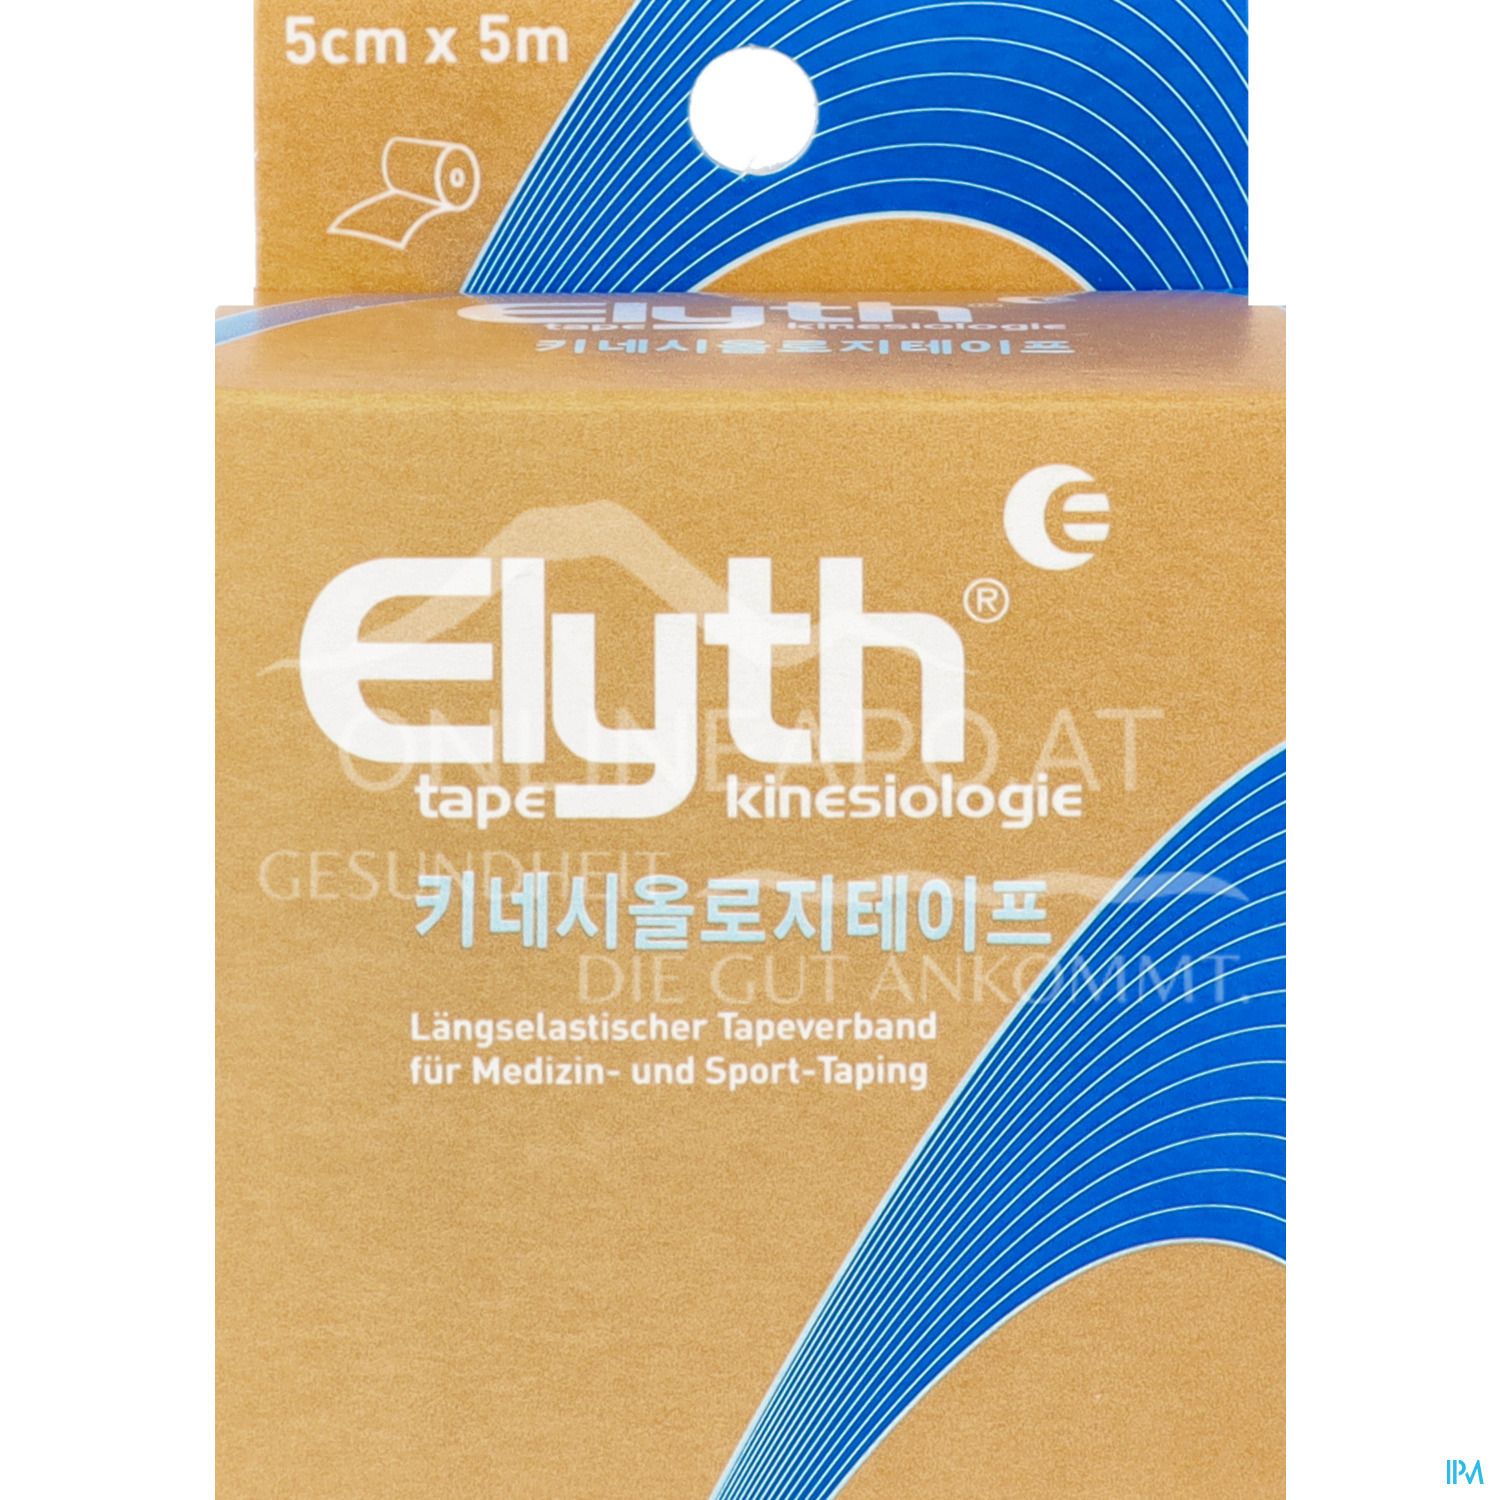 ELYTH Tape Kinesiologie 5 cm x 5 m - Neutral